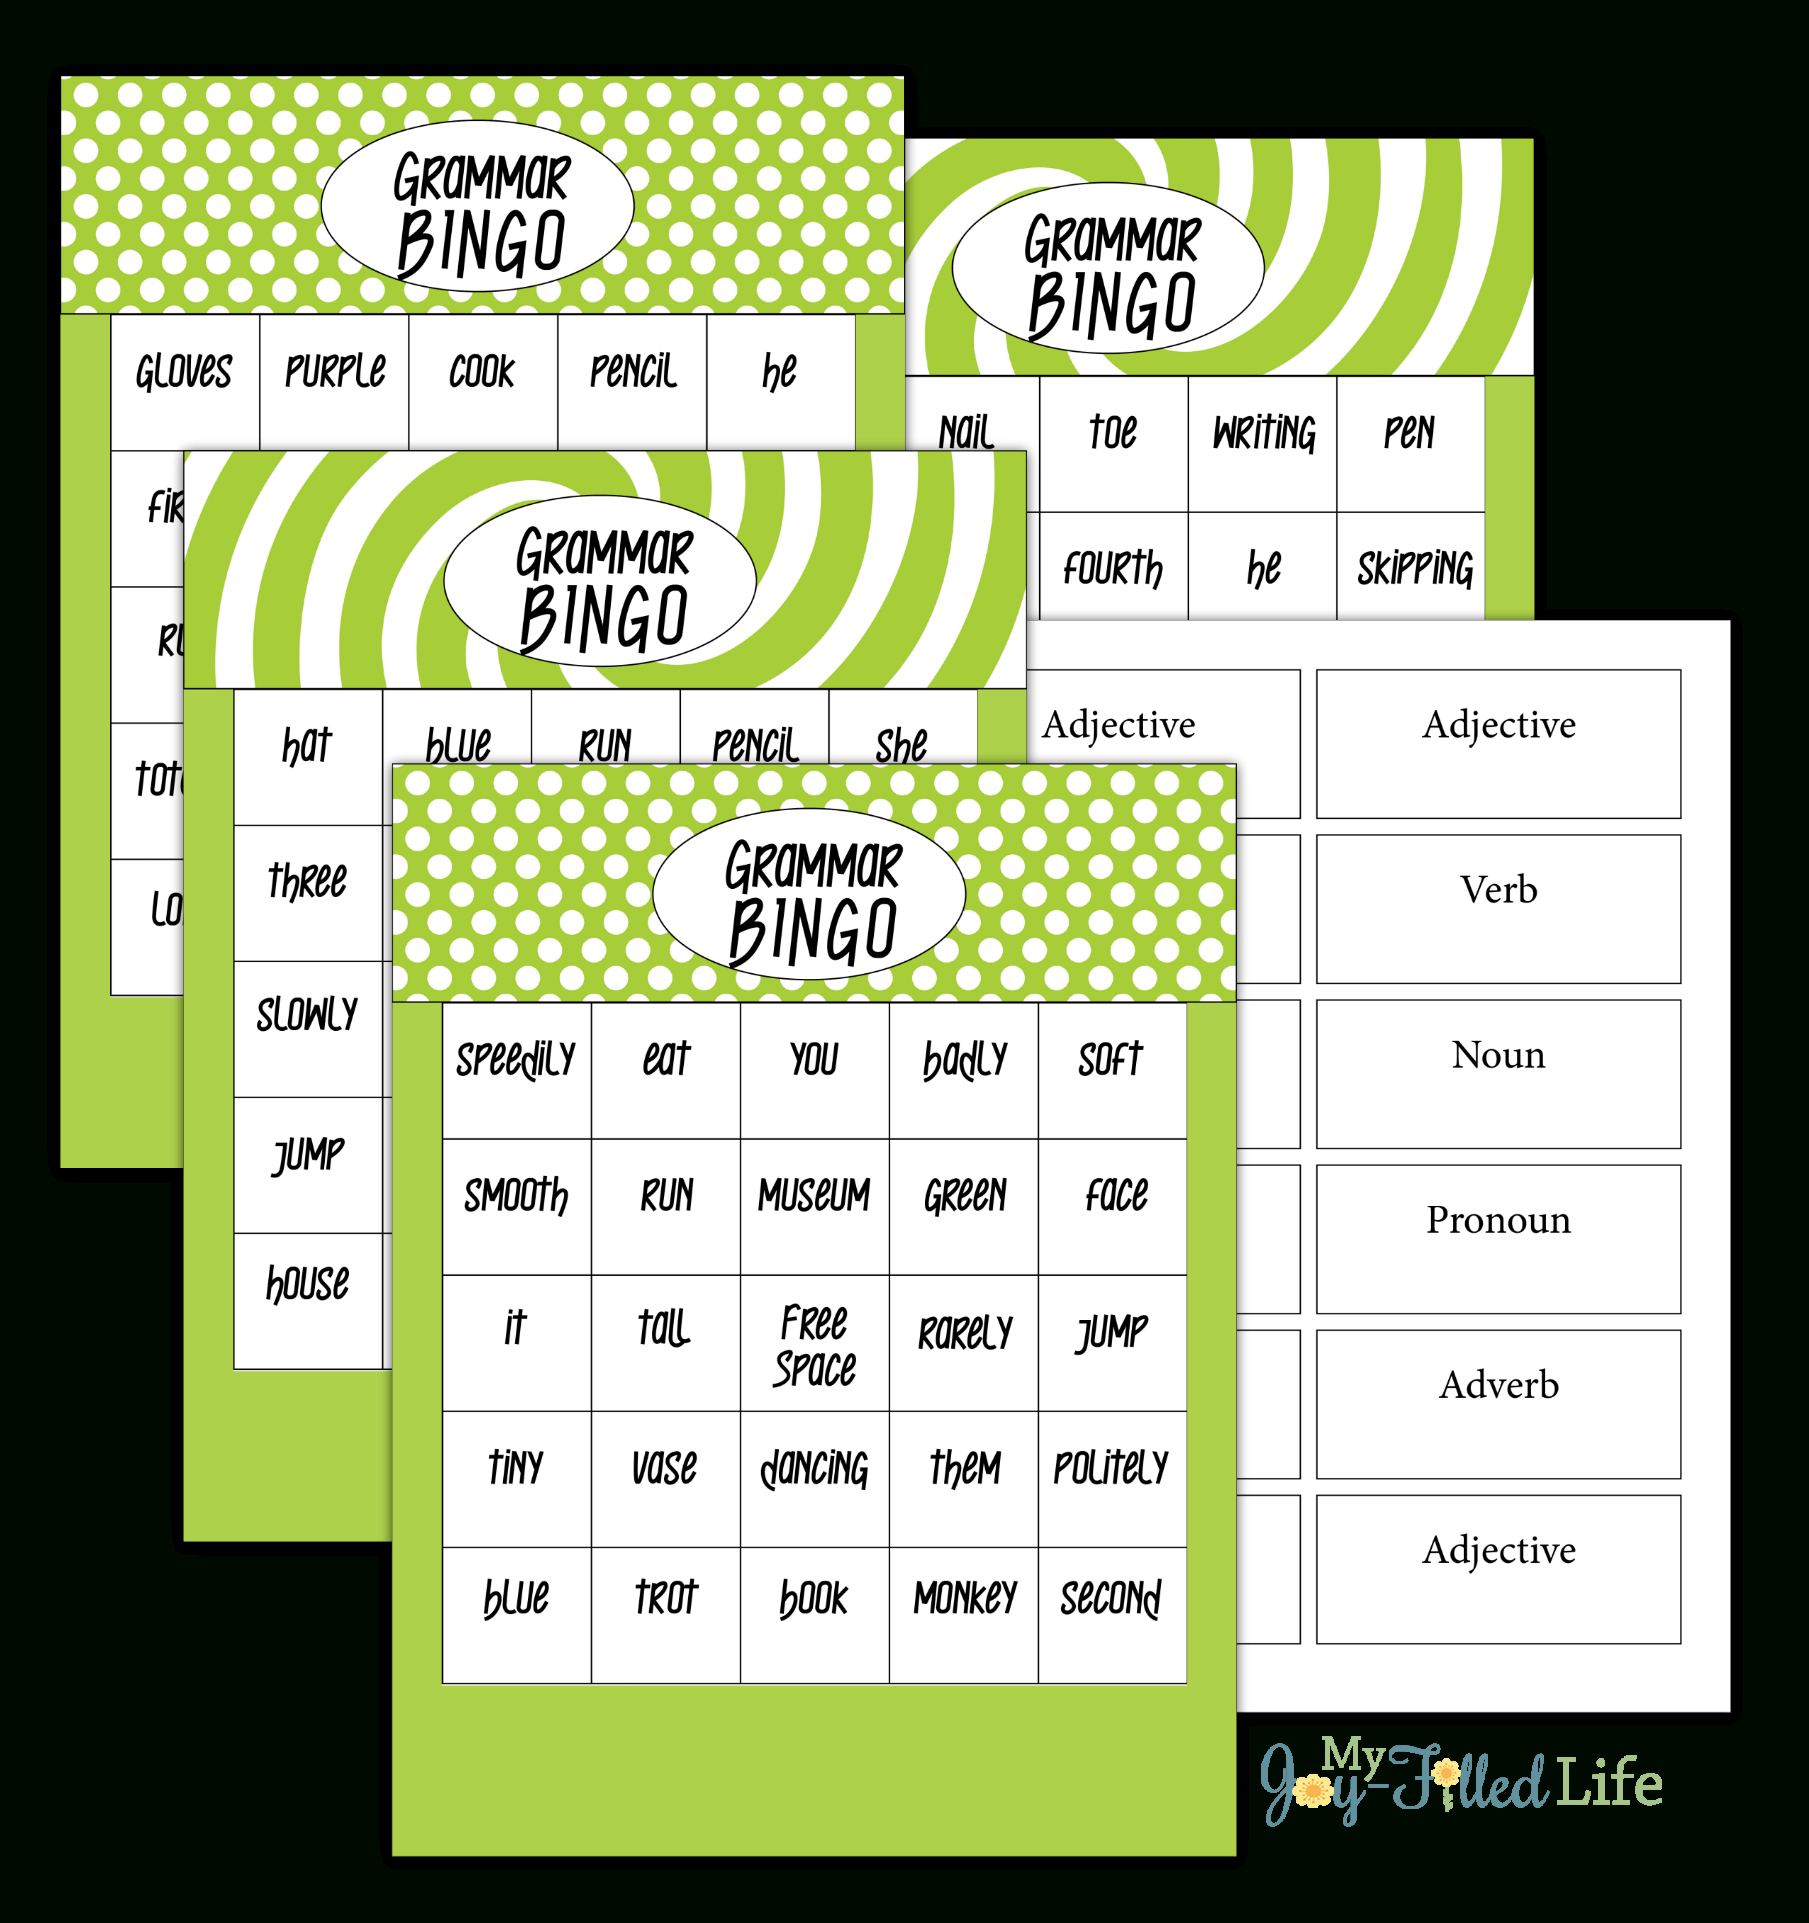 Grammar Bingo - My Joy-Filled Life - Free Printable Parts Of Speech Bingo